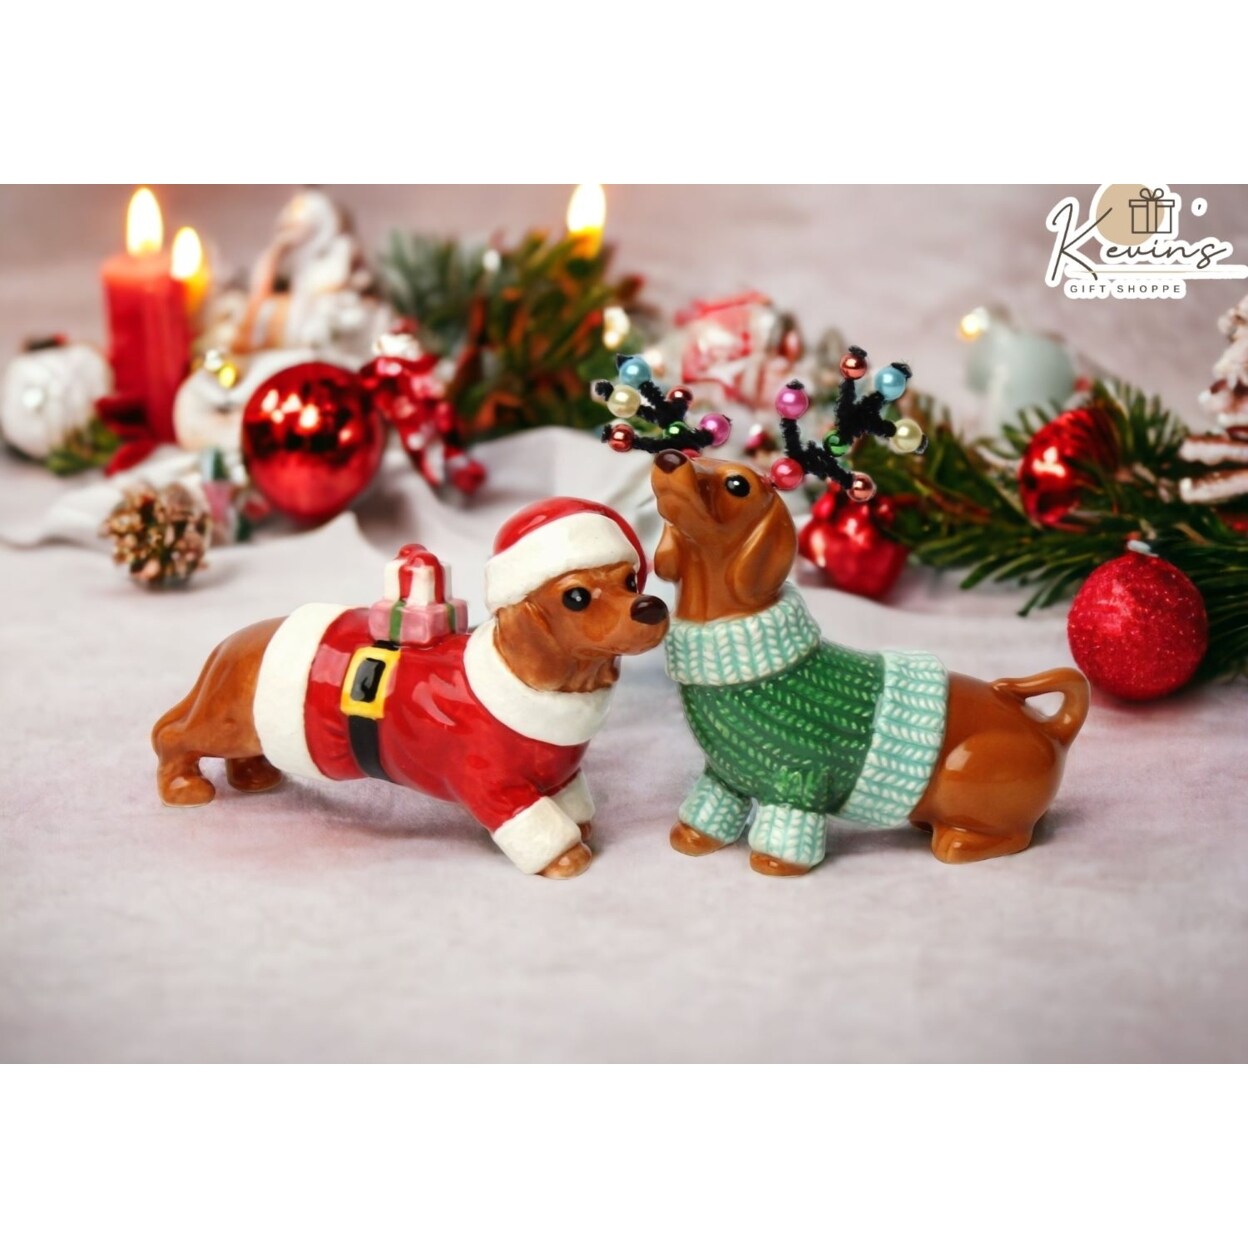 kevinsgiftshoppe Ceramic Christmas Dachshund Weiner Dog Salt And Pepper Shakers Home Decor   Kitchen Decor